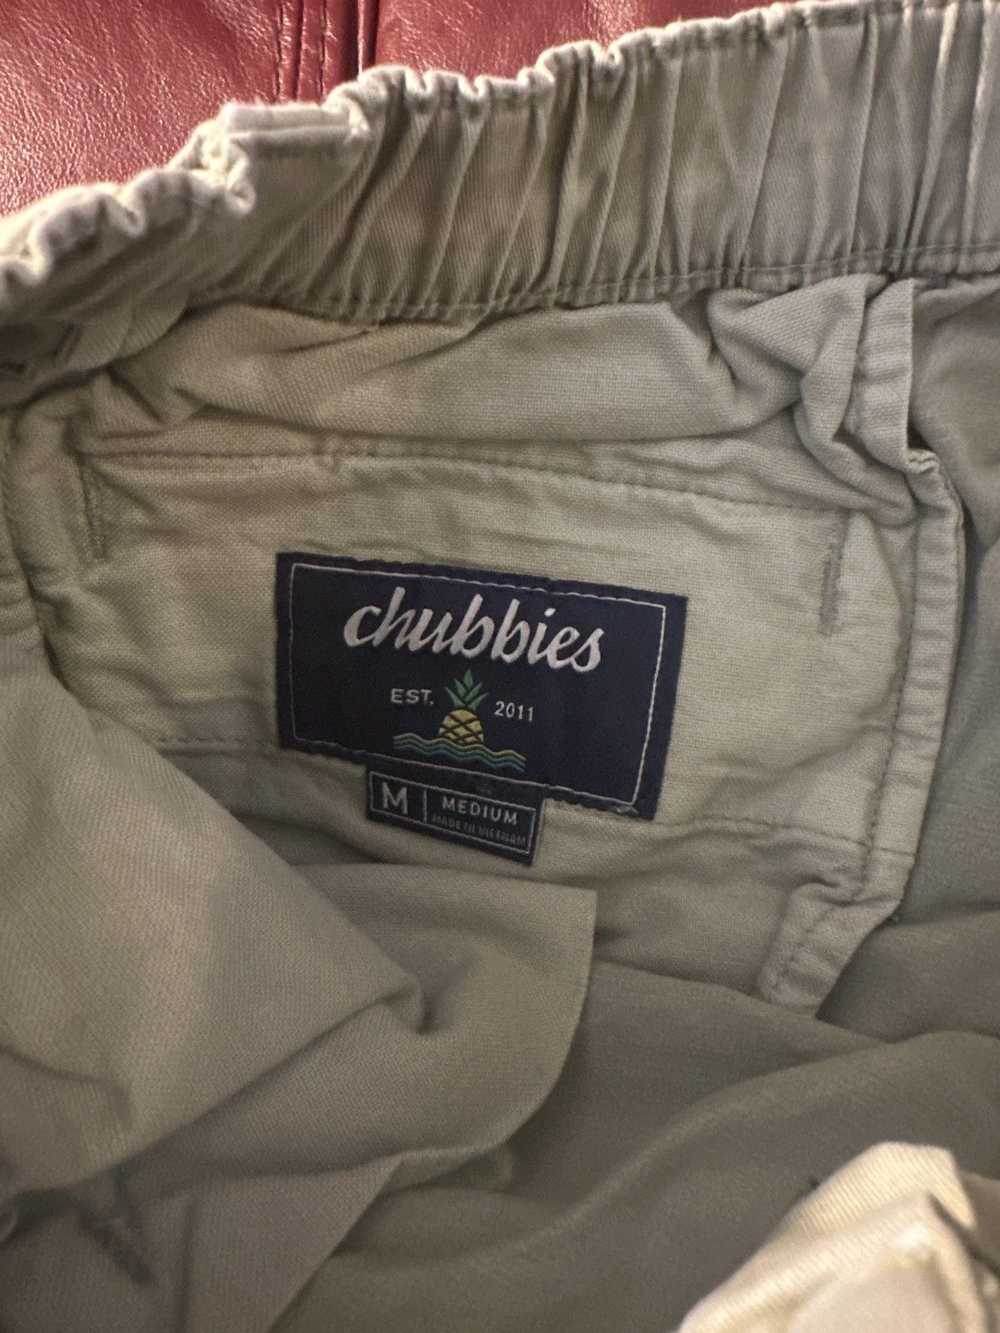 Chubbies Chubbie’s 5’ Green Shorts - image 2